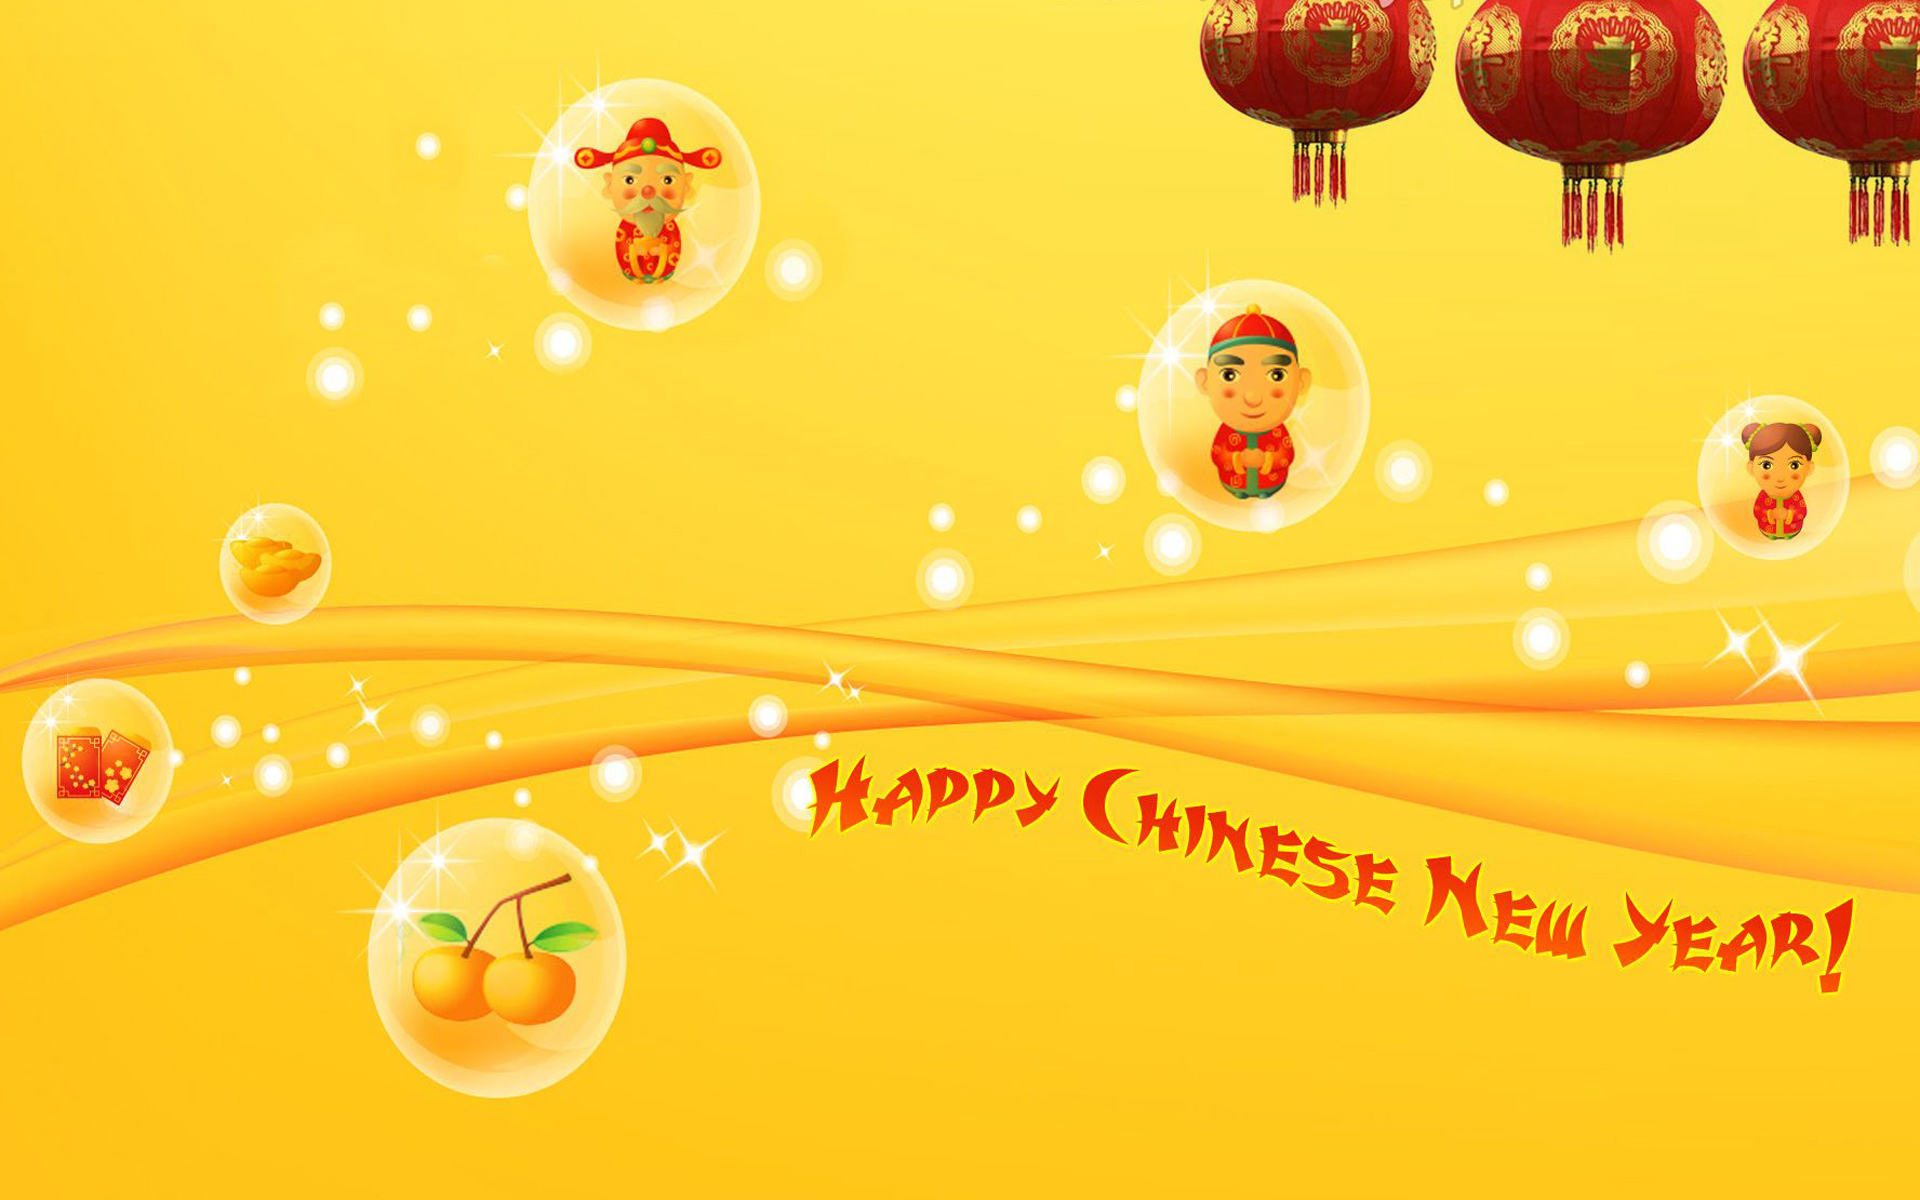 Chinese Wallpaper Designs Download Free | PixelsTalk.Net1920 x 1200